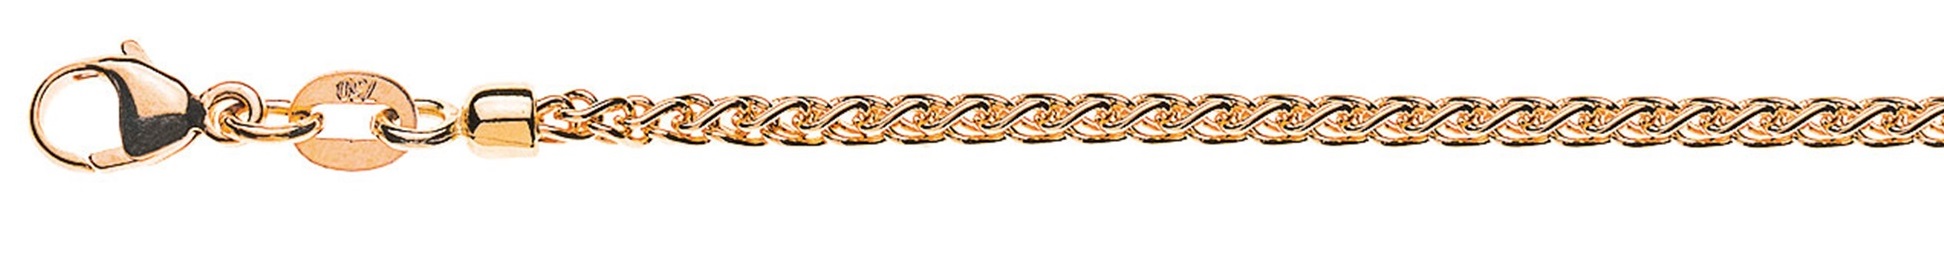 AURONOS Prestige Halskette Roségold 18K Zopfkette 50cm 2.15mm